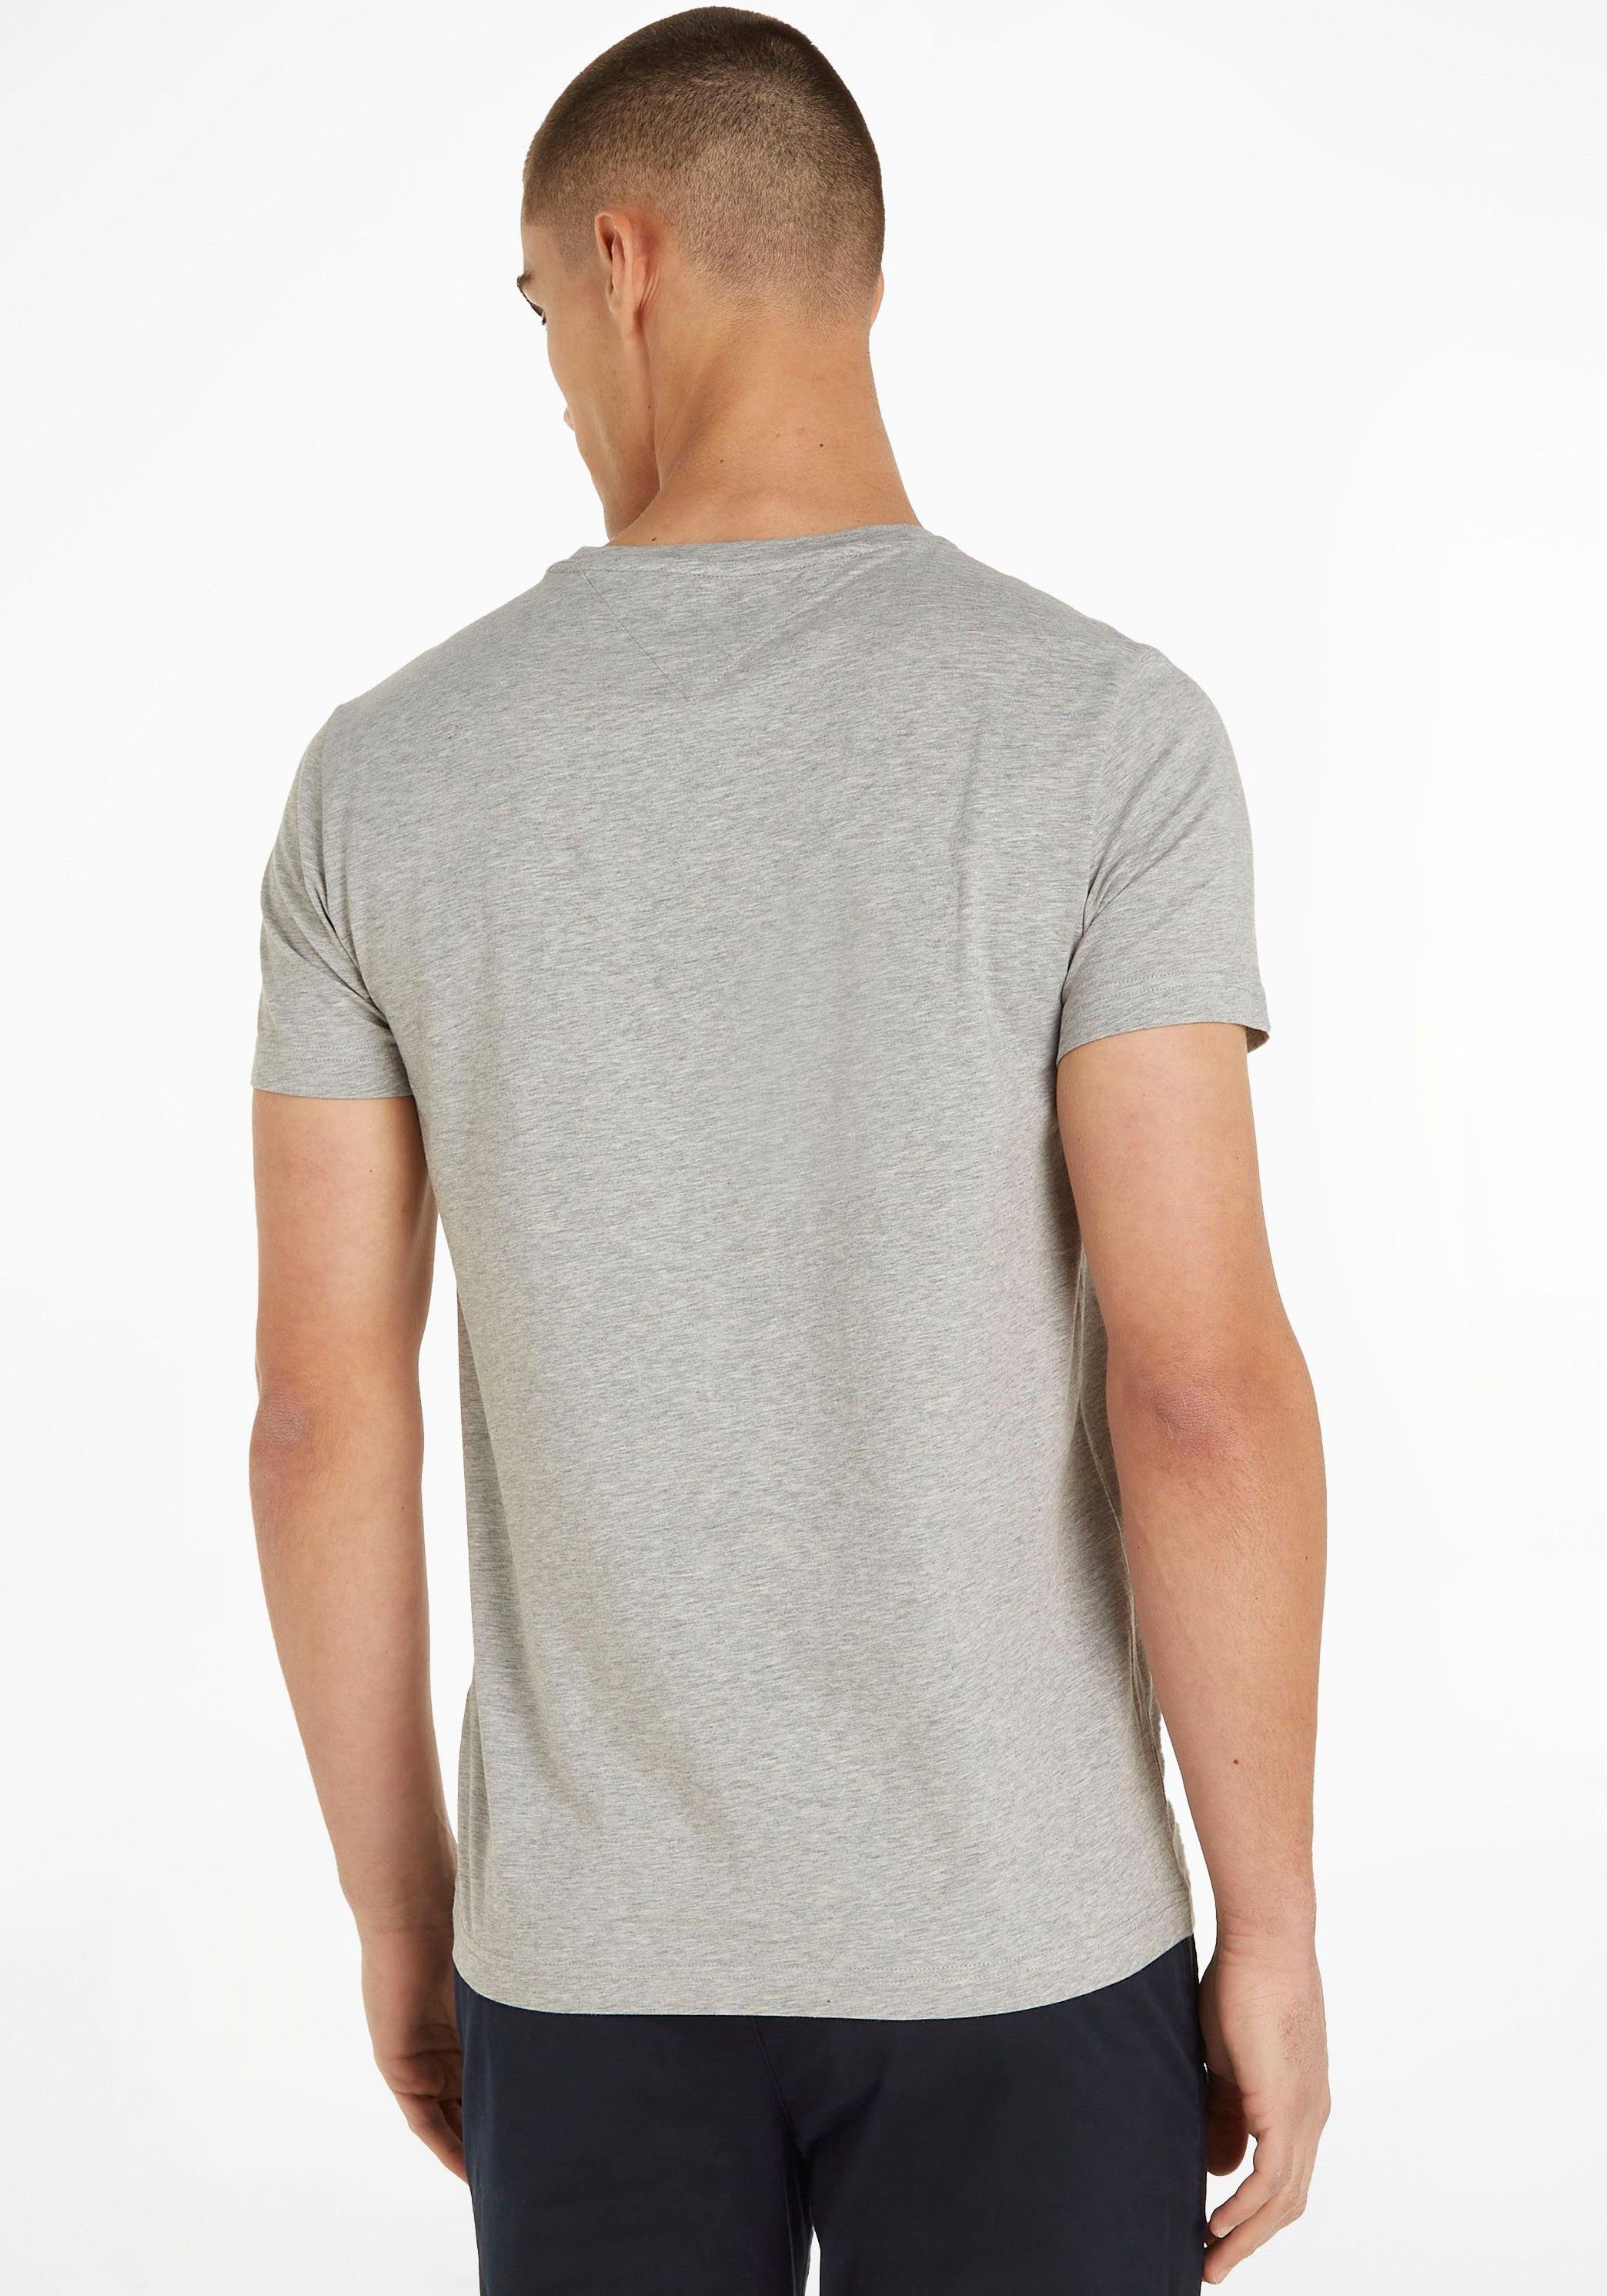 T-Shirt grey T-Shirt Stretch RH Slim melange Tommy Hilfiger